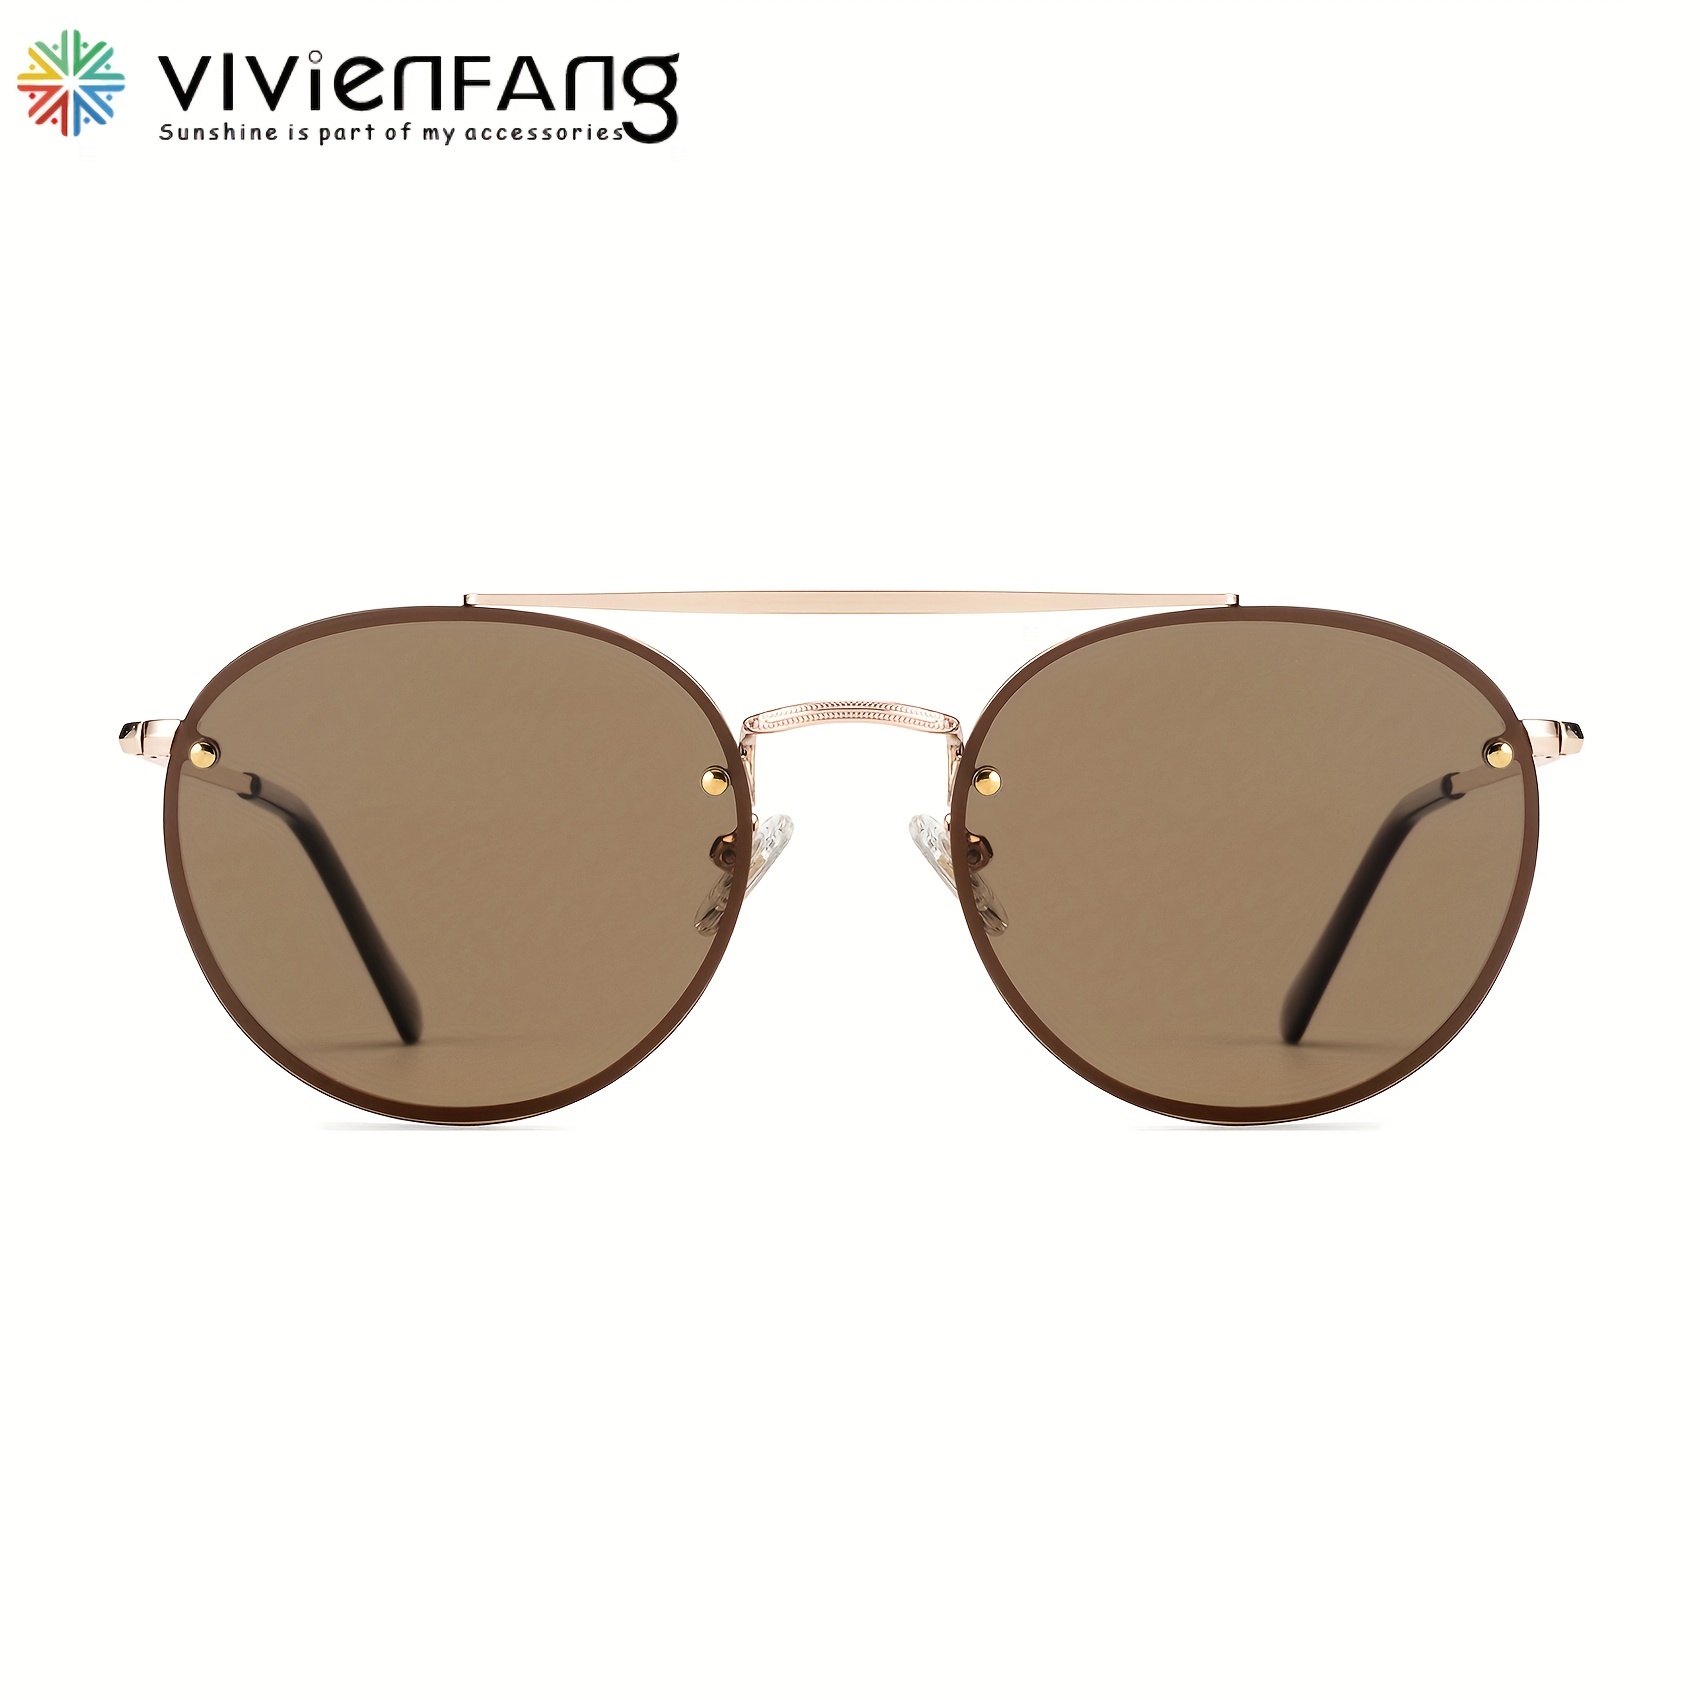 Vivienfang Round Polarized Sunglasses For Men Uv Protection